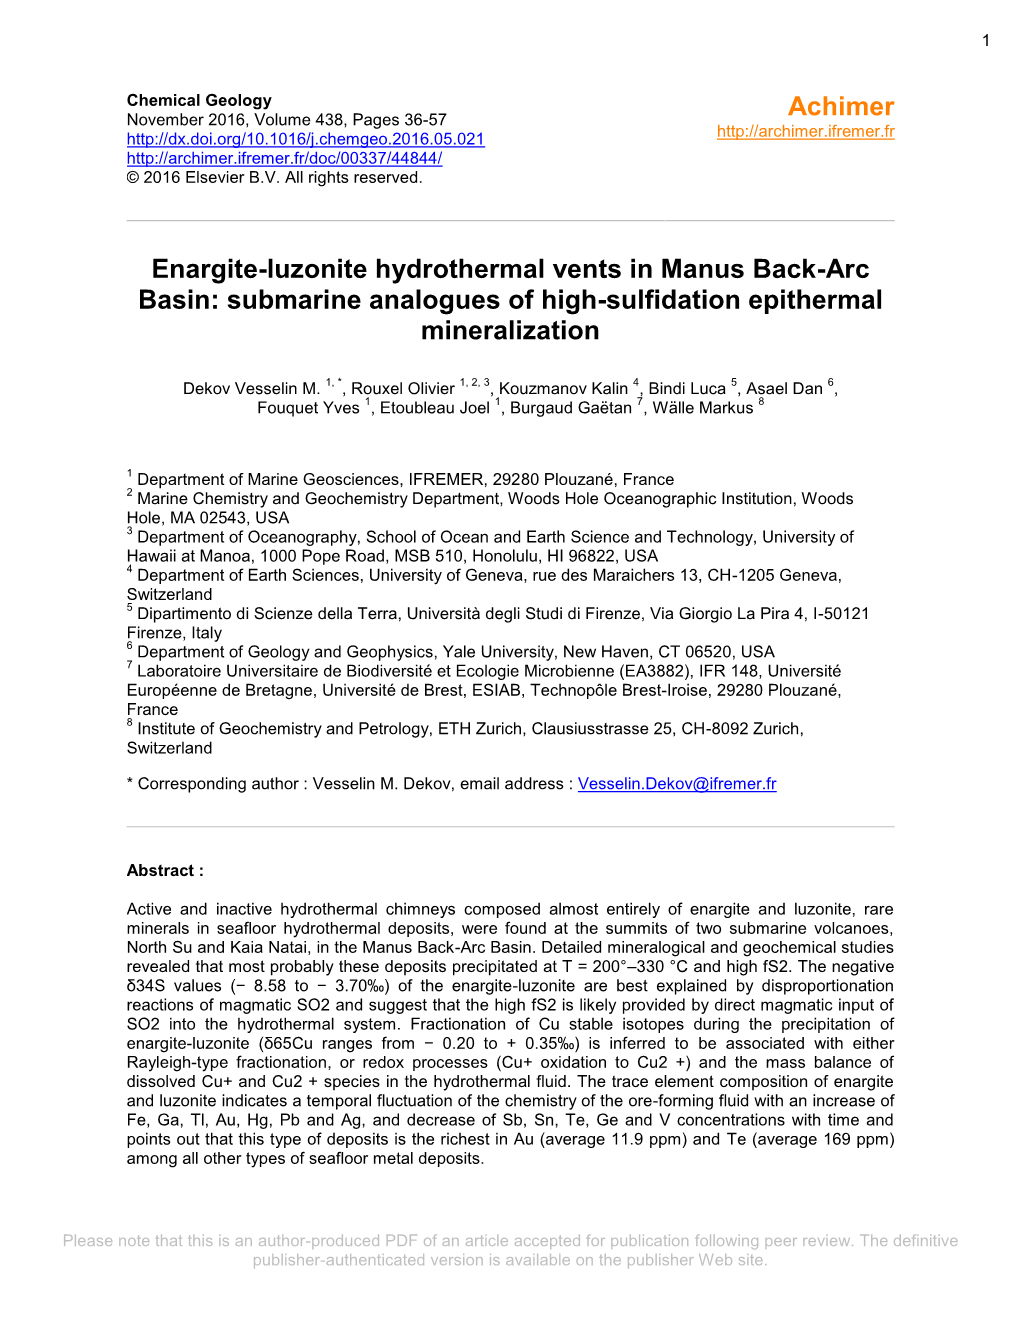 Enargite-Luzonite Hydrothermal Vents in Manus Back-Arc Basin: Submarine Analogues of High-Sulfidation Epithermal Mineralization